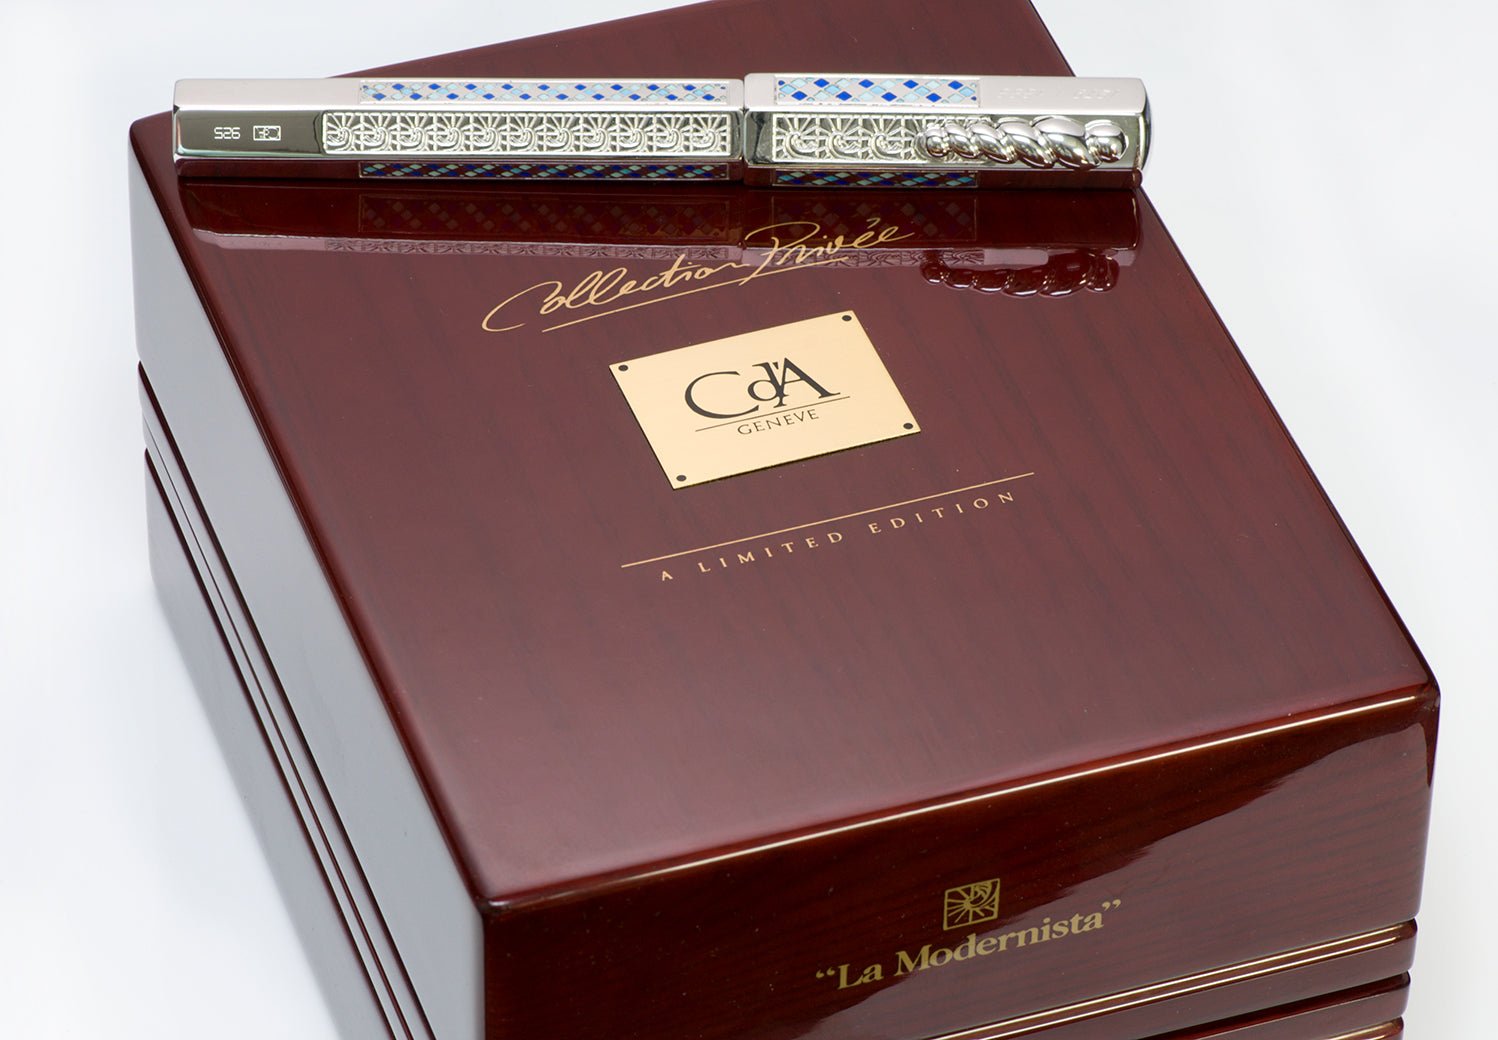 Caran d' Ache La Modernista Limited Edition Fountain Pen